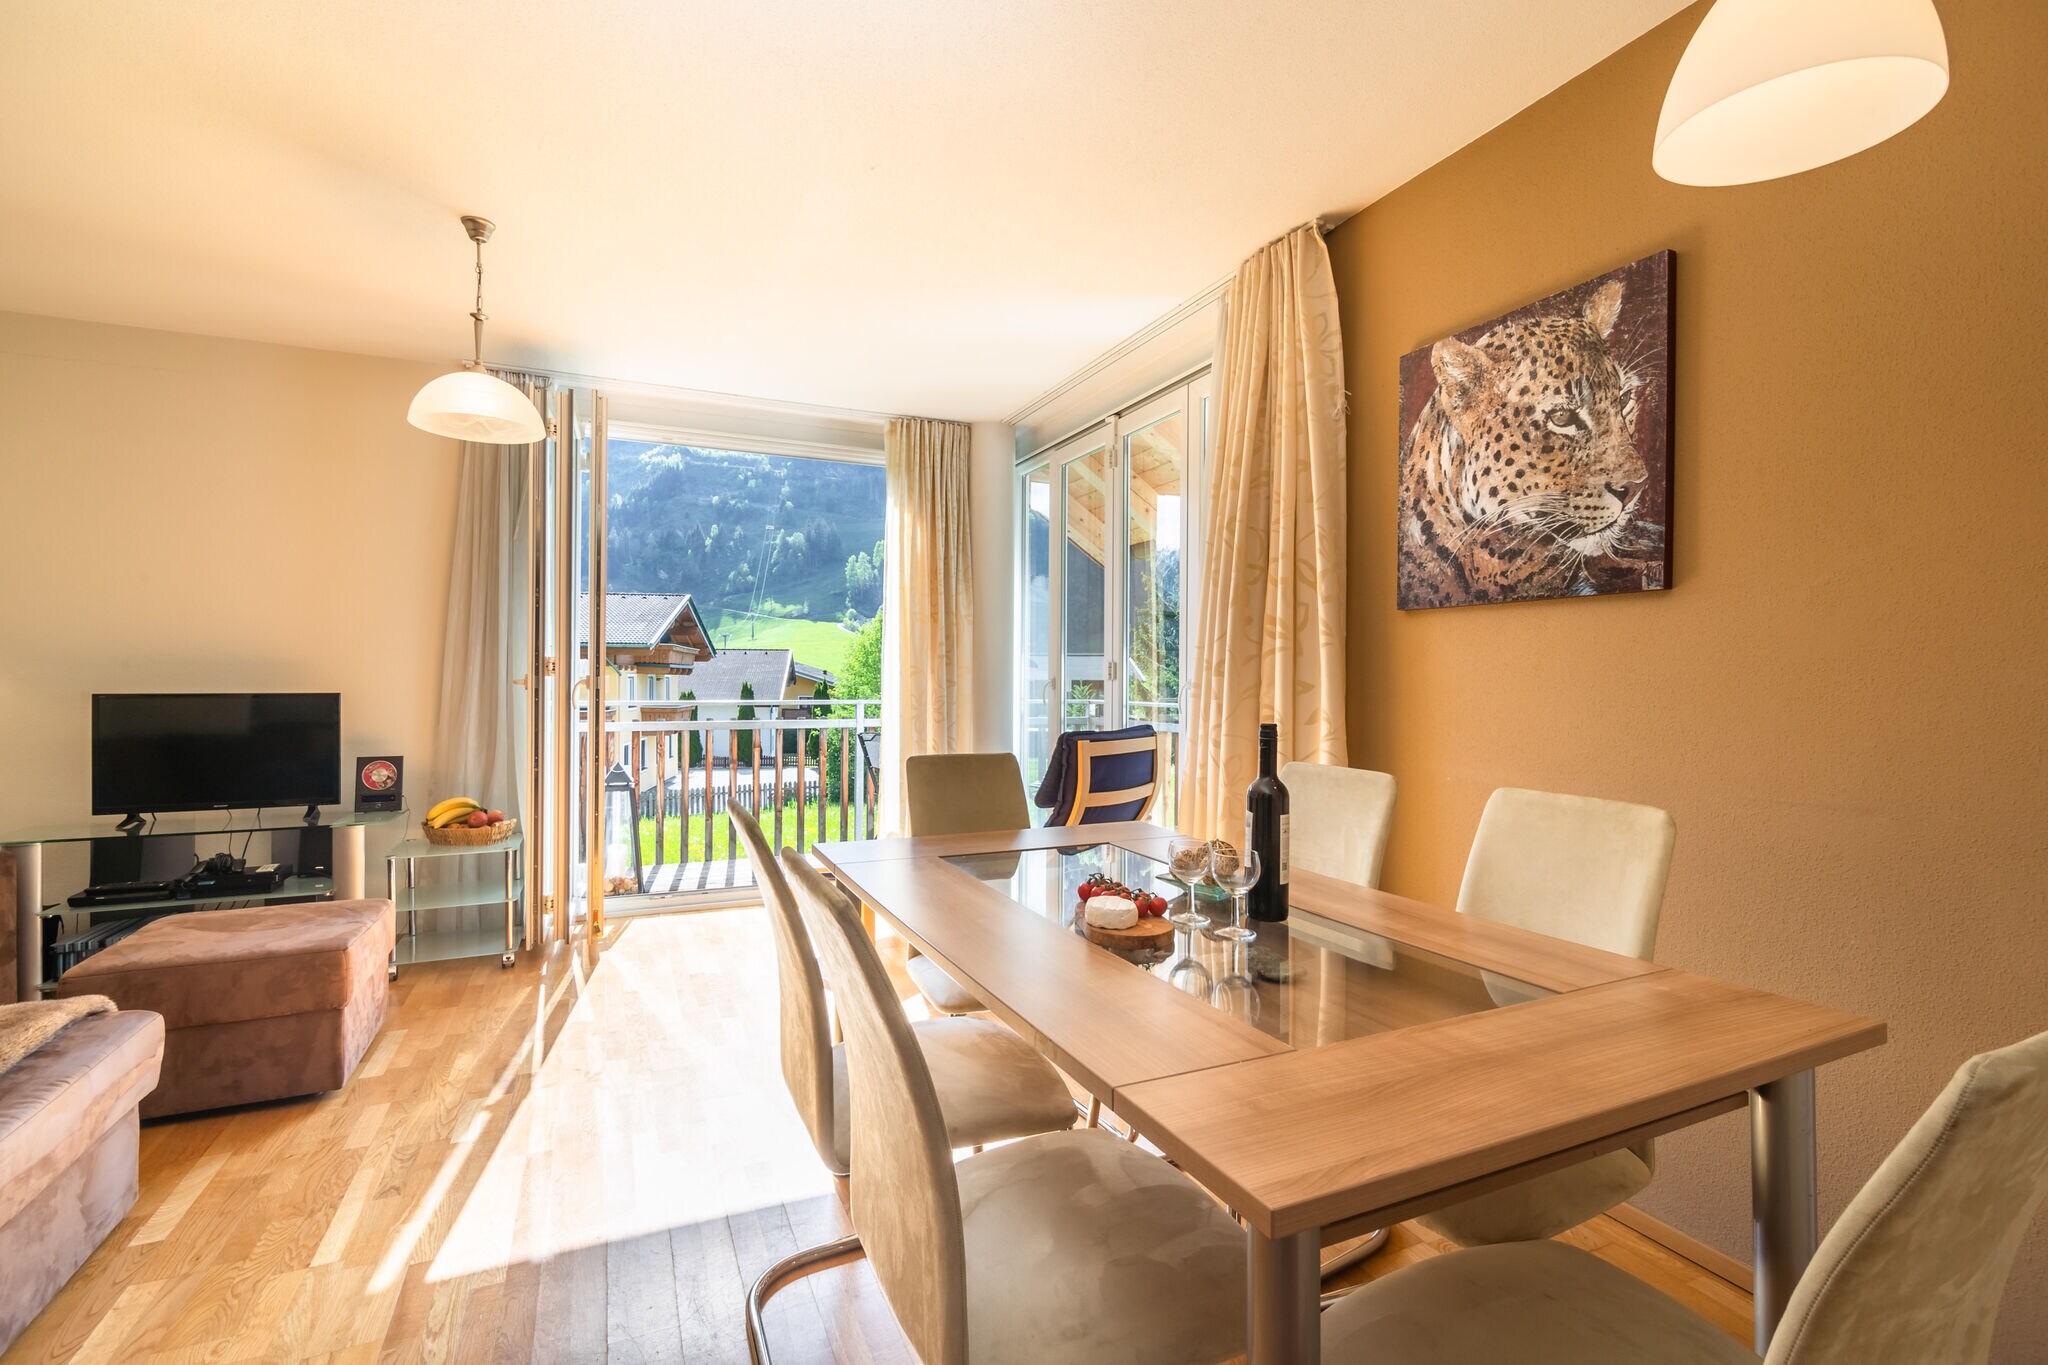 Apartment in Rauris/Salzburgerland nahe Skigebiet